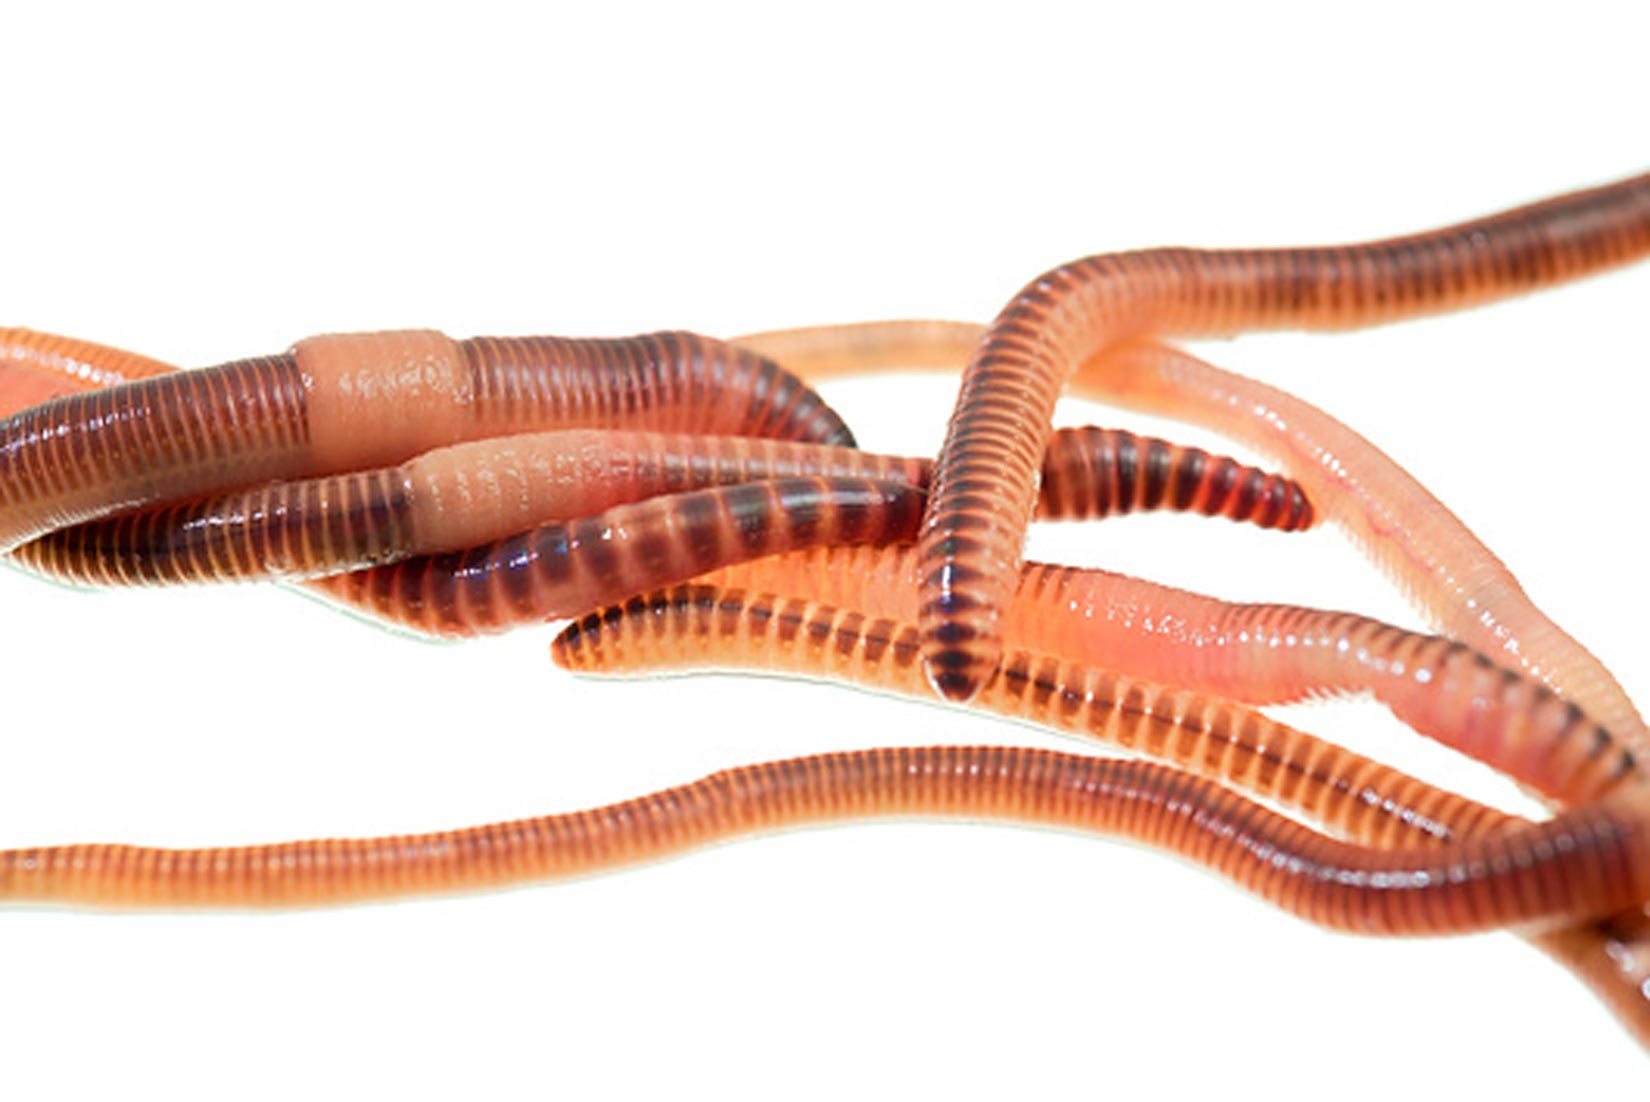 Slika prikazuje skupinu gujavica (tzv. kišnih glista). Imaju izduženo, zmijoliko tijelo raščlanjeno na brojne kolutiće.